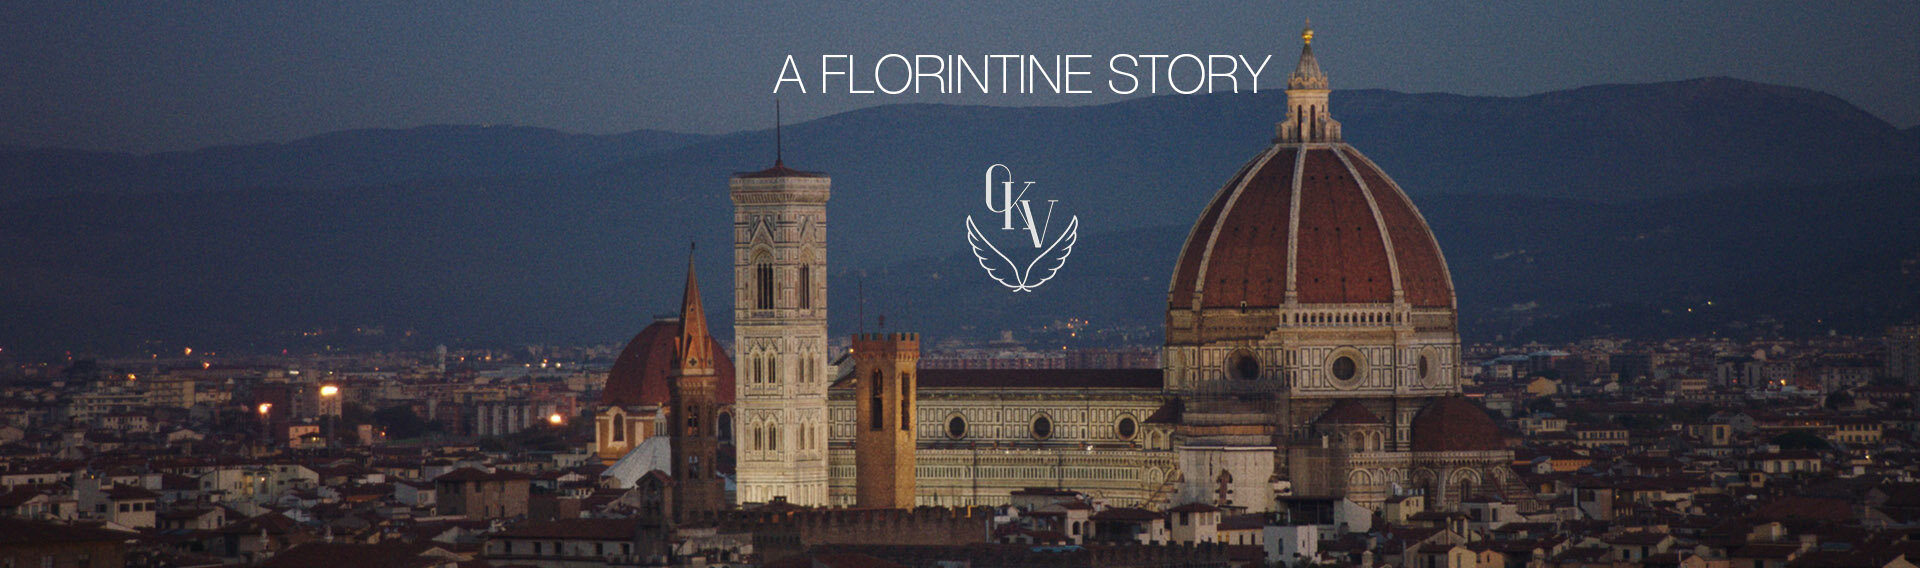 OKV Florence.jpg